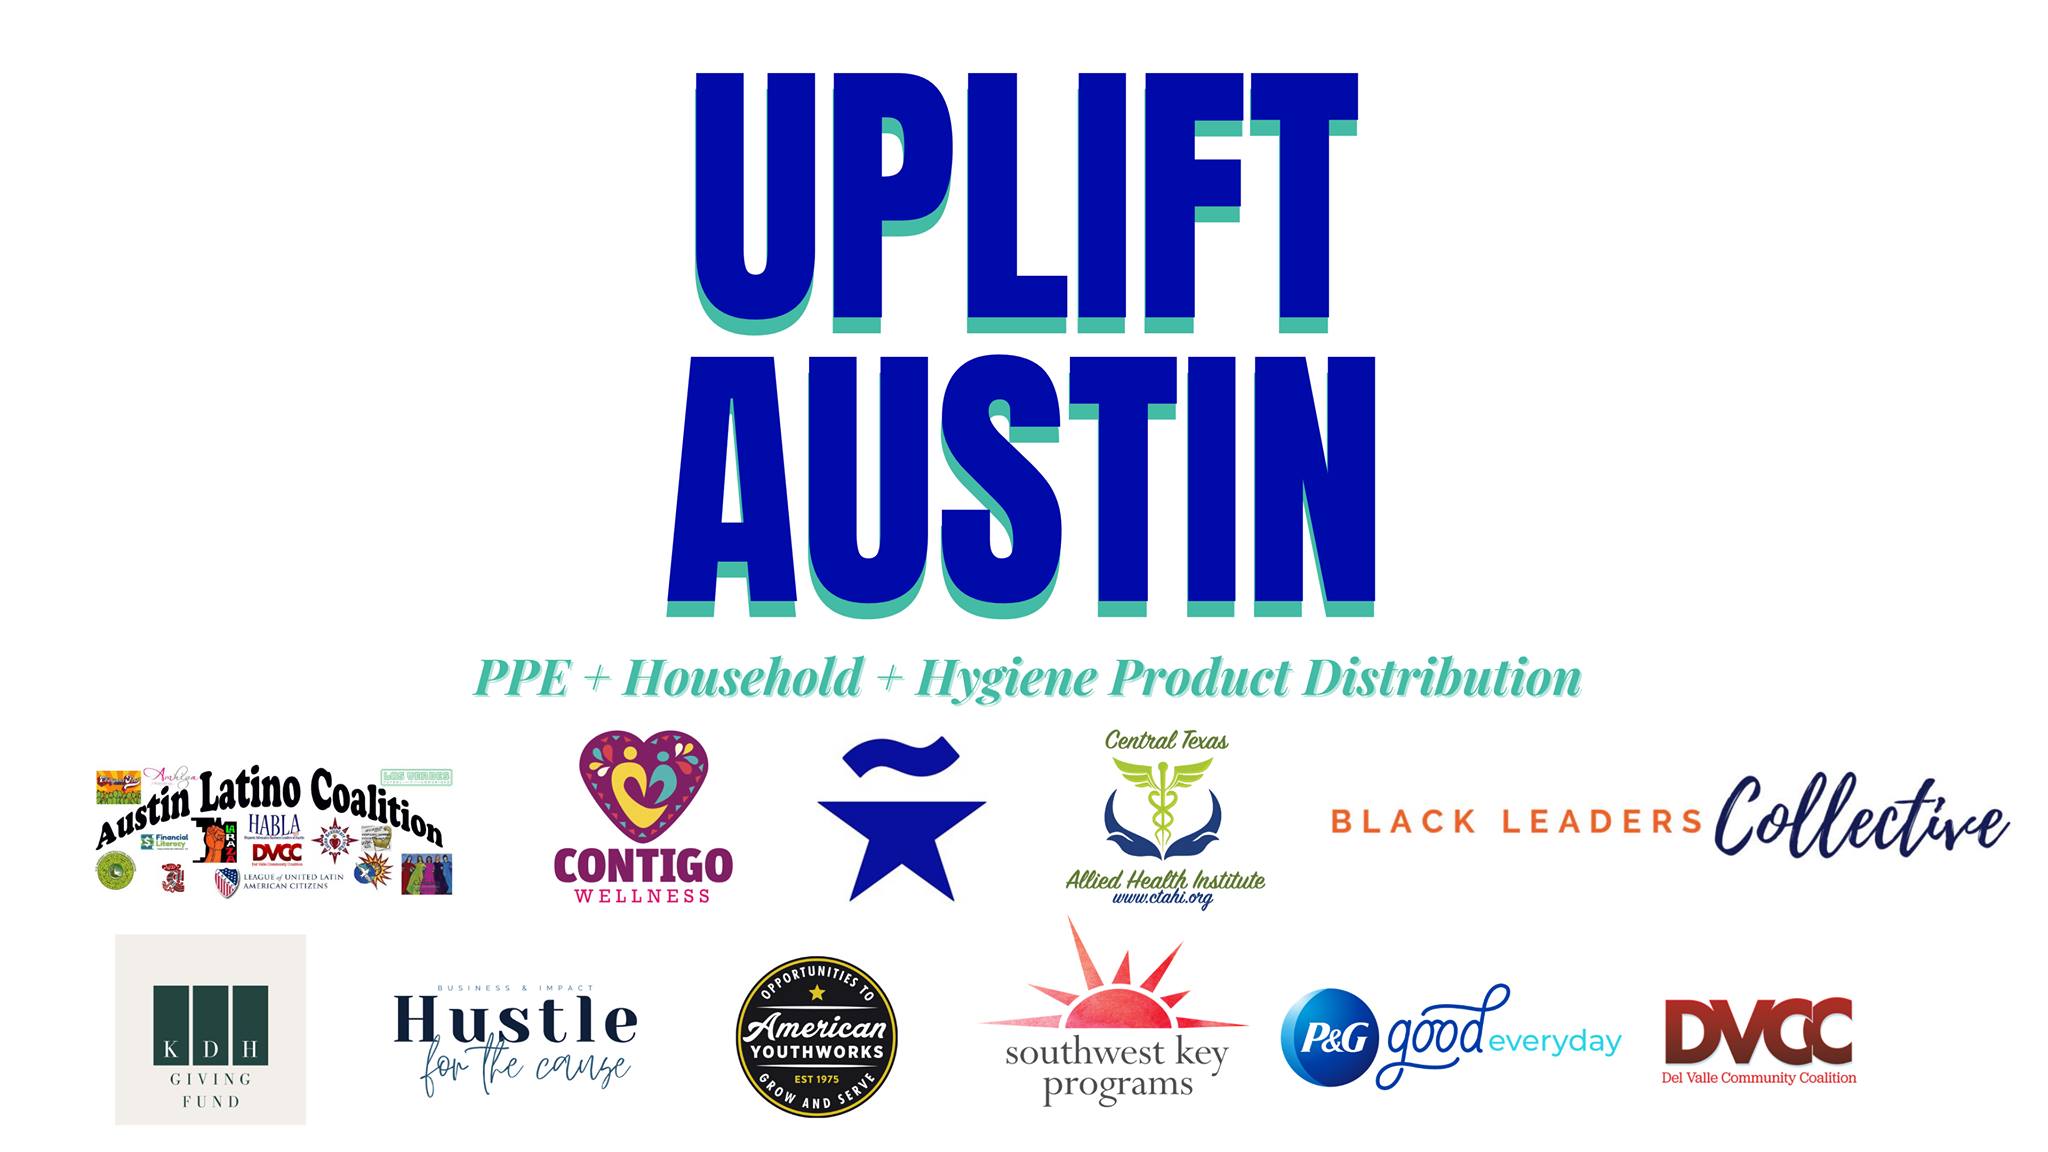 Uplift Austin